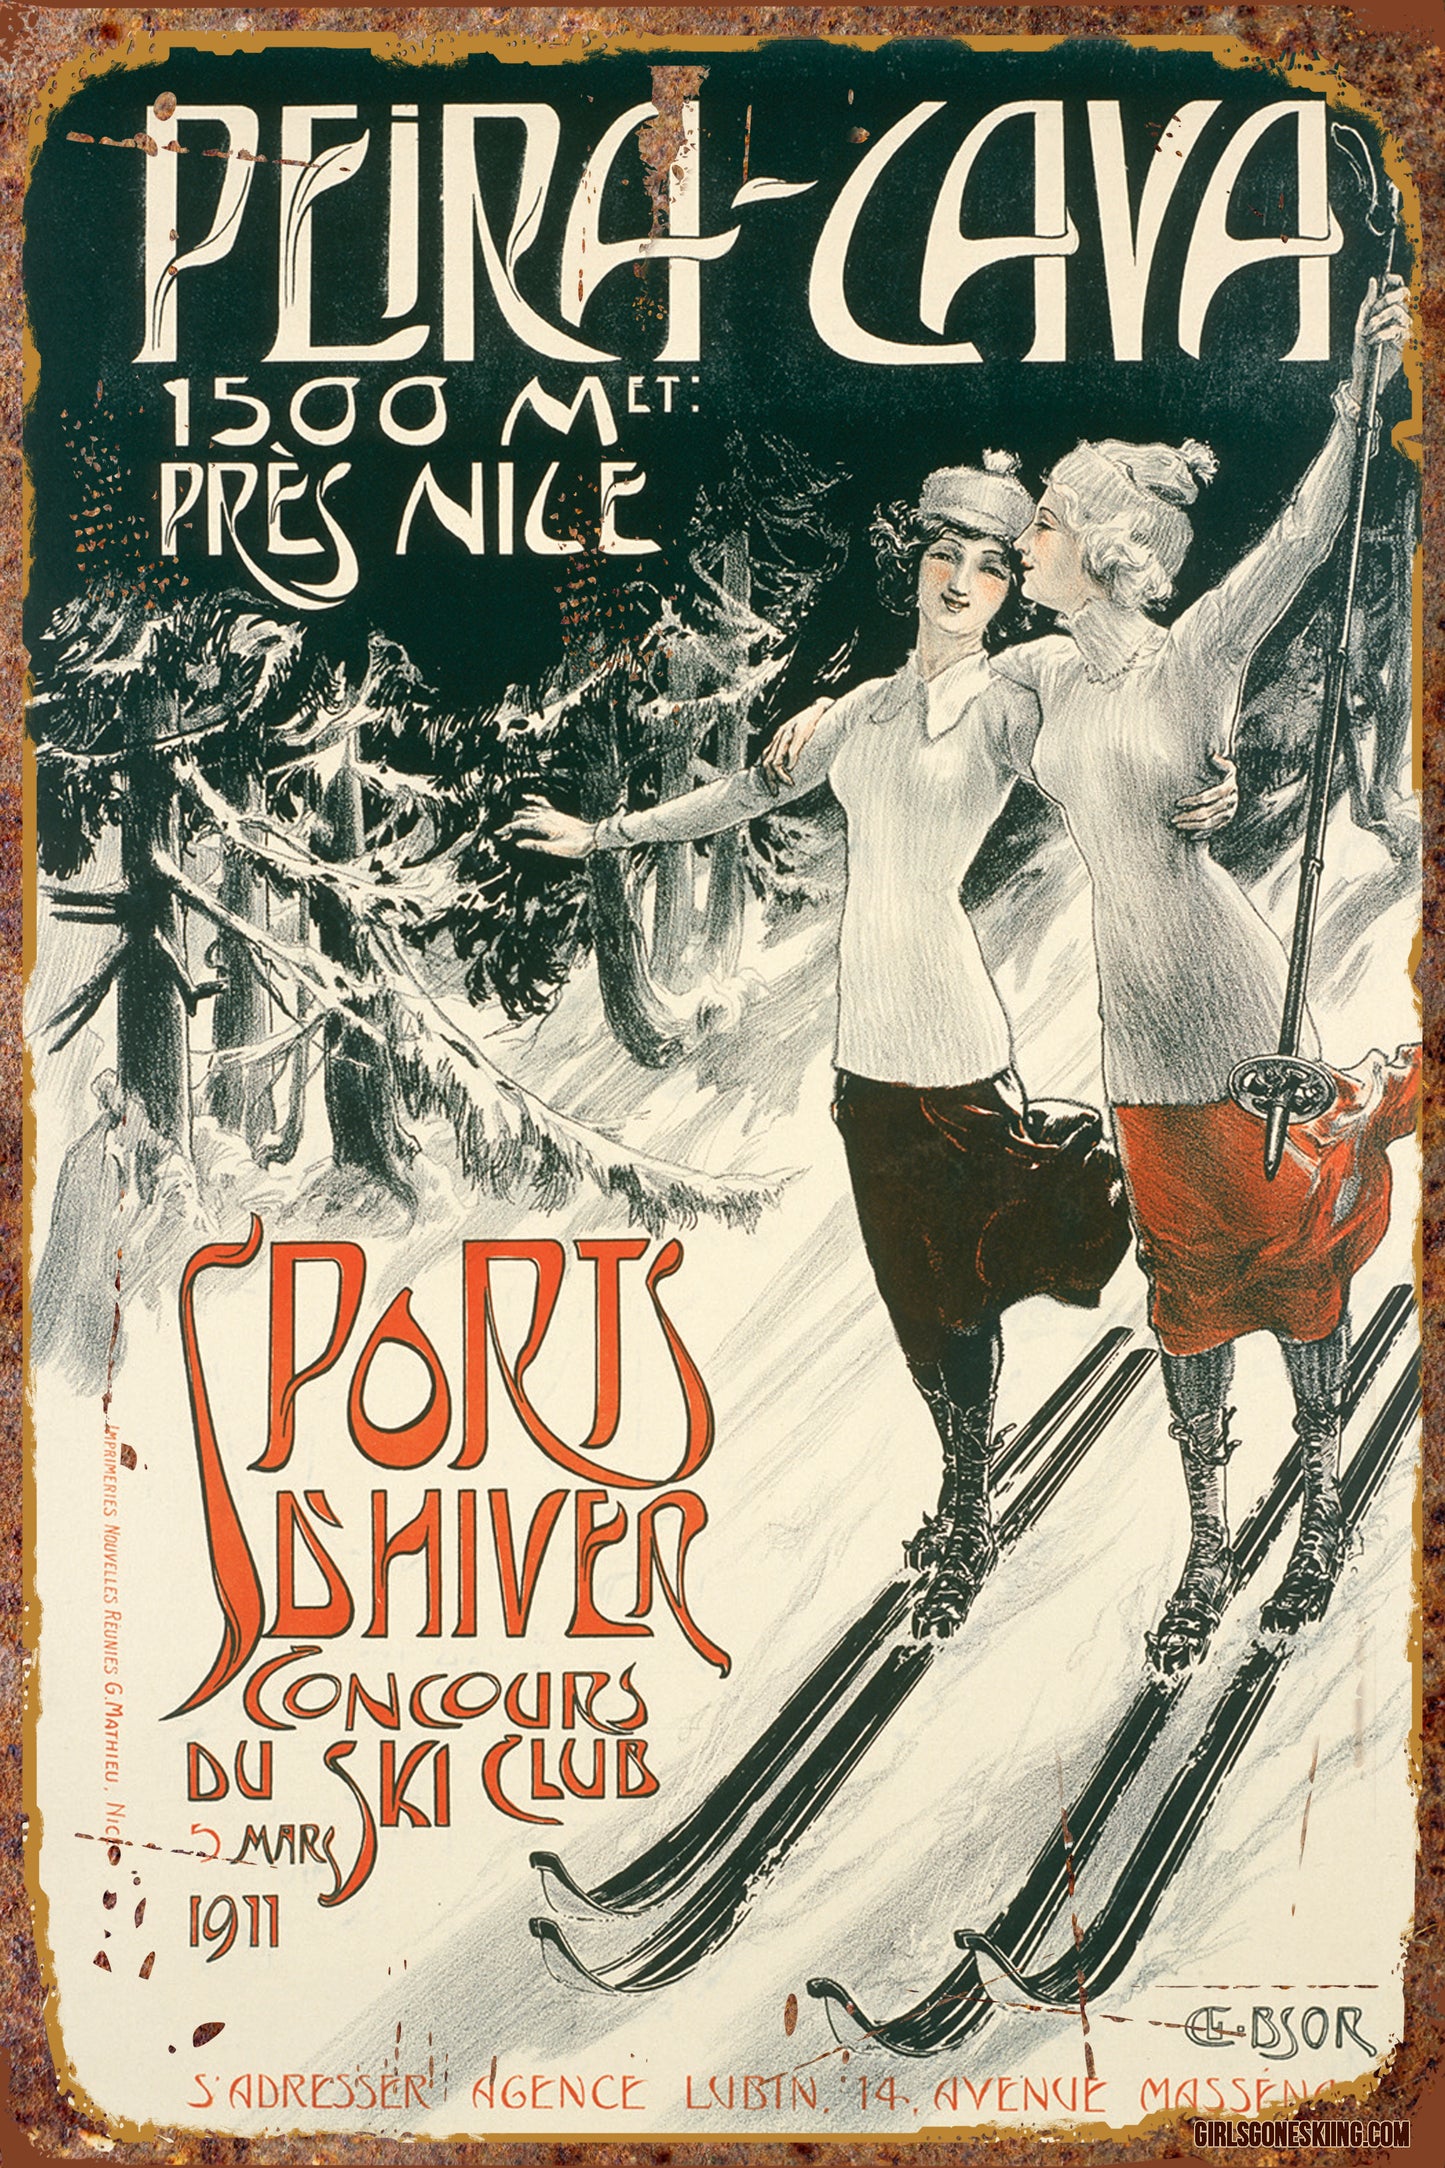 Peira Cava Vintage Ski Poster Tin Sign-sold out